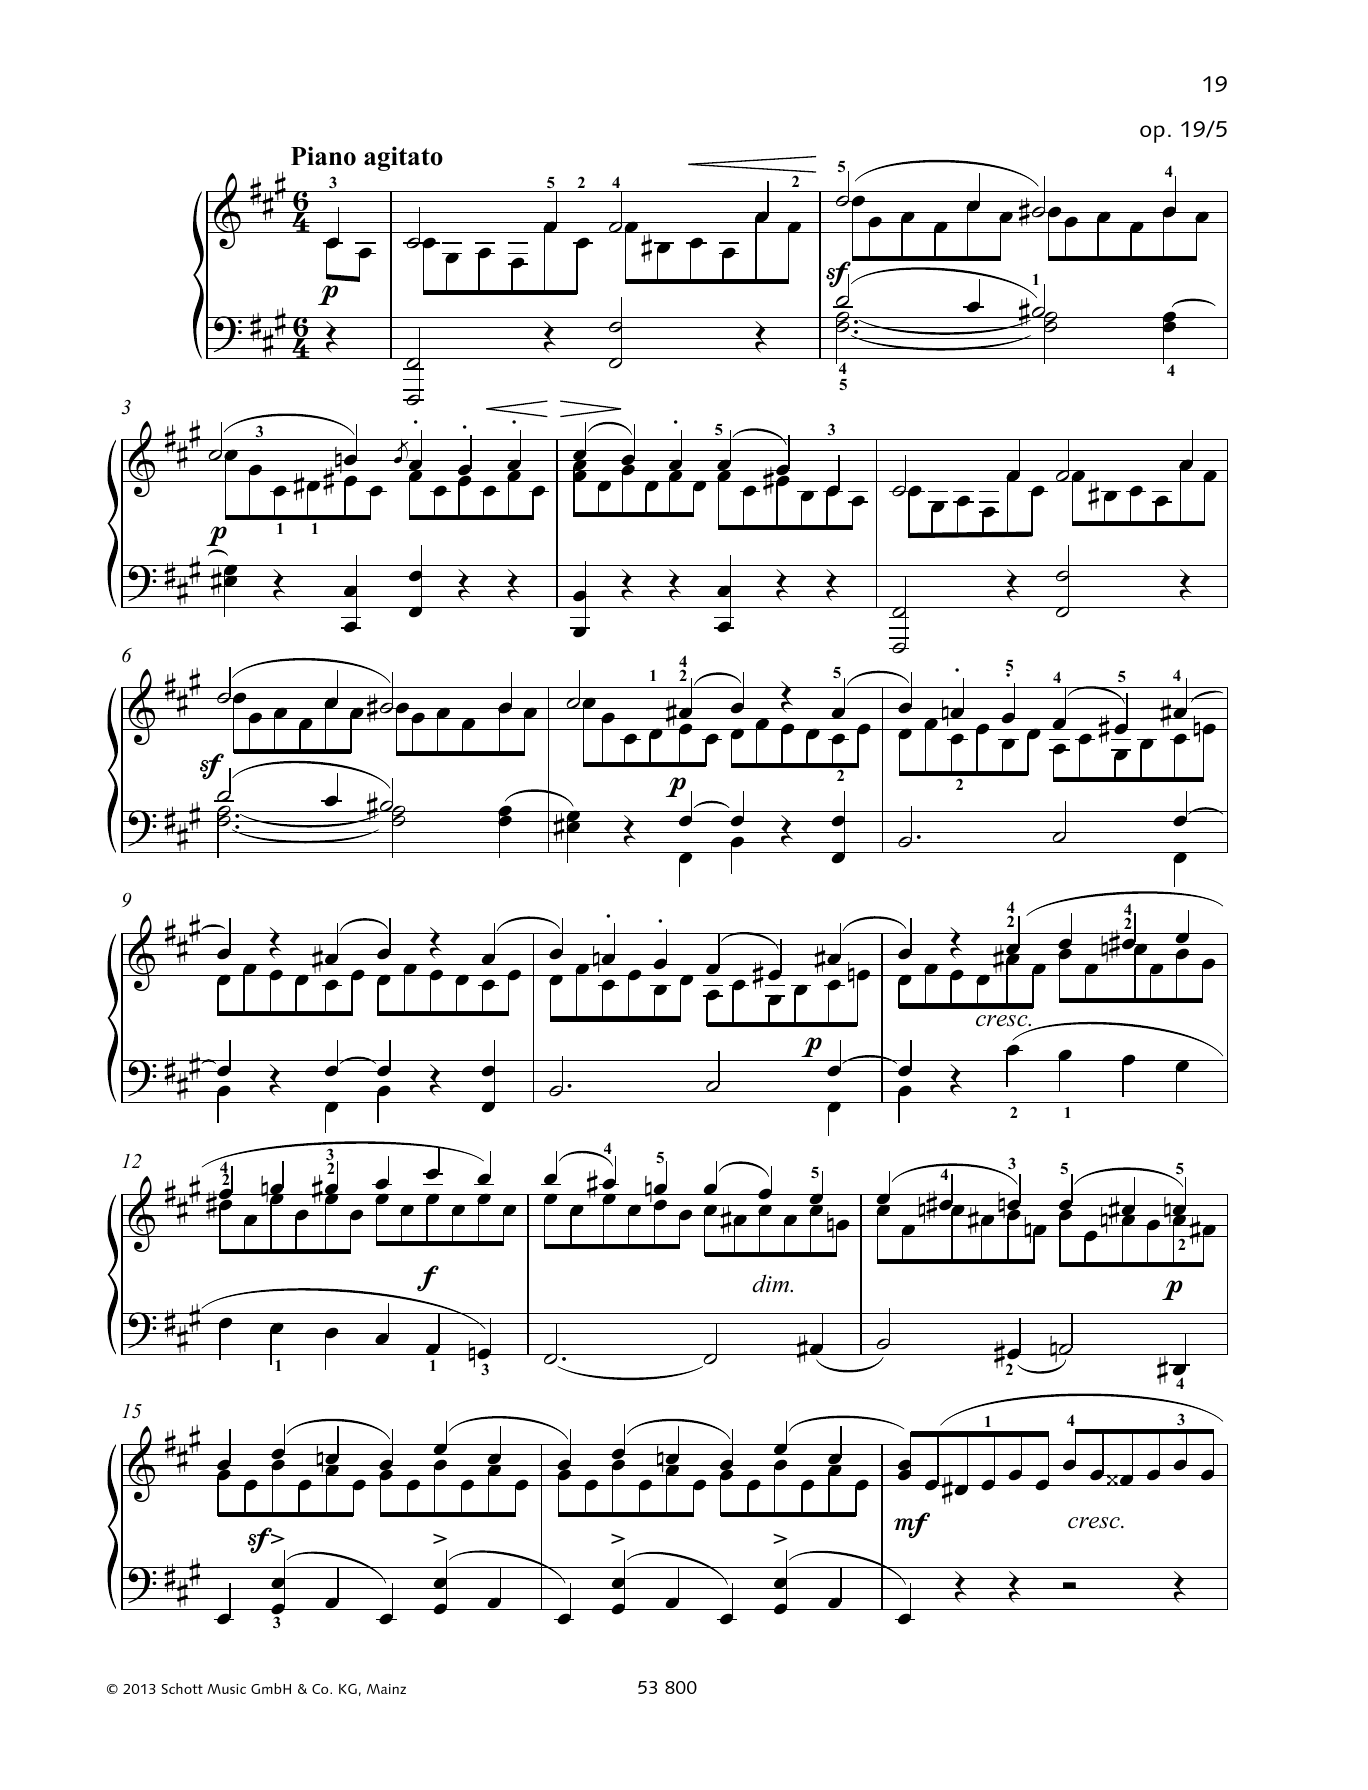 Felix Mendelssohn Bartholdy Piano agitato Sheet Music Notes & Chords for Piano Solo - Download or Print PDF